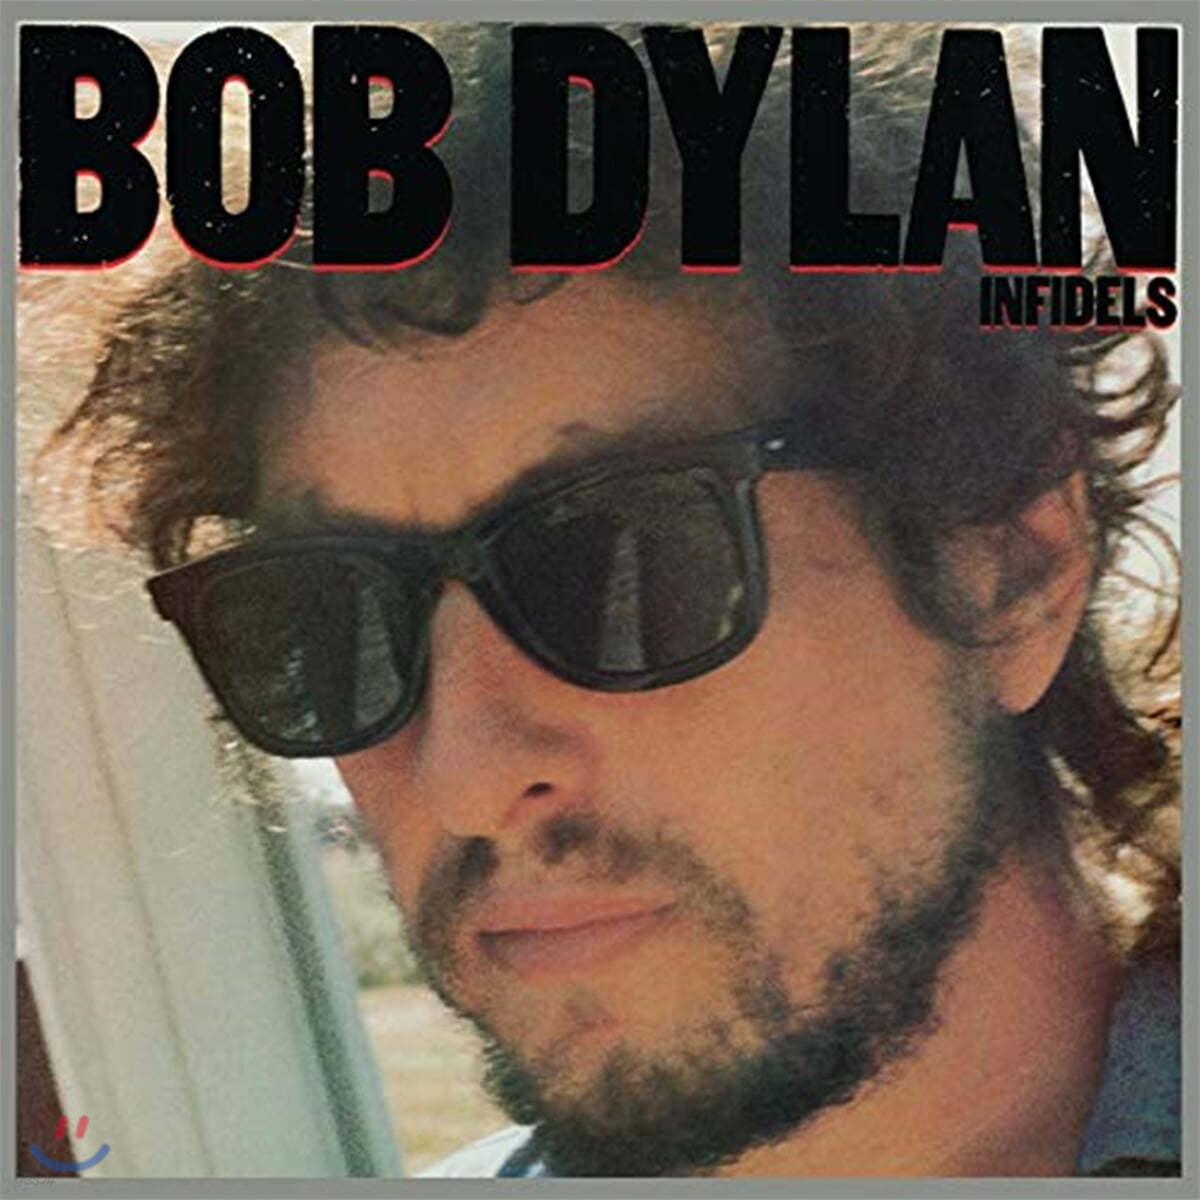 Bob Dylan (밥 딜런) - Infidels [LP]